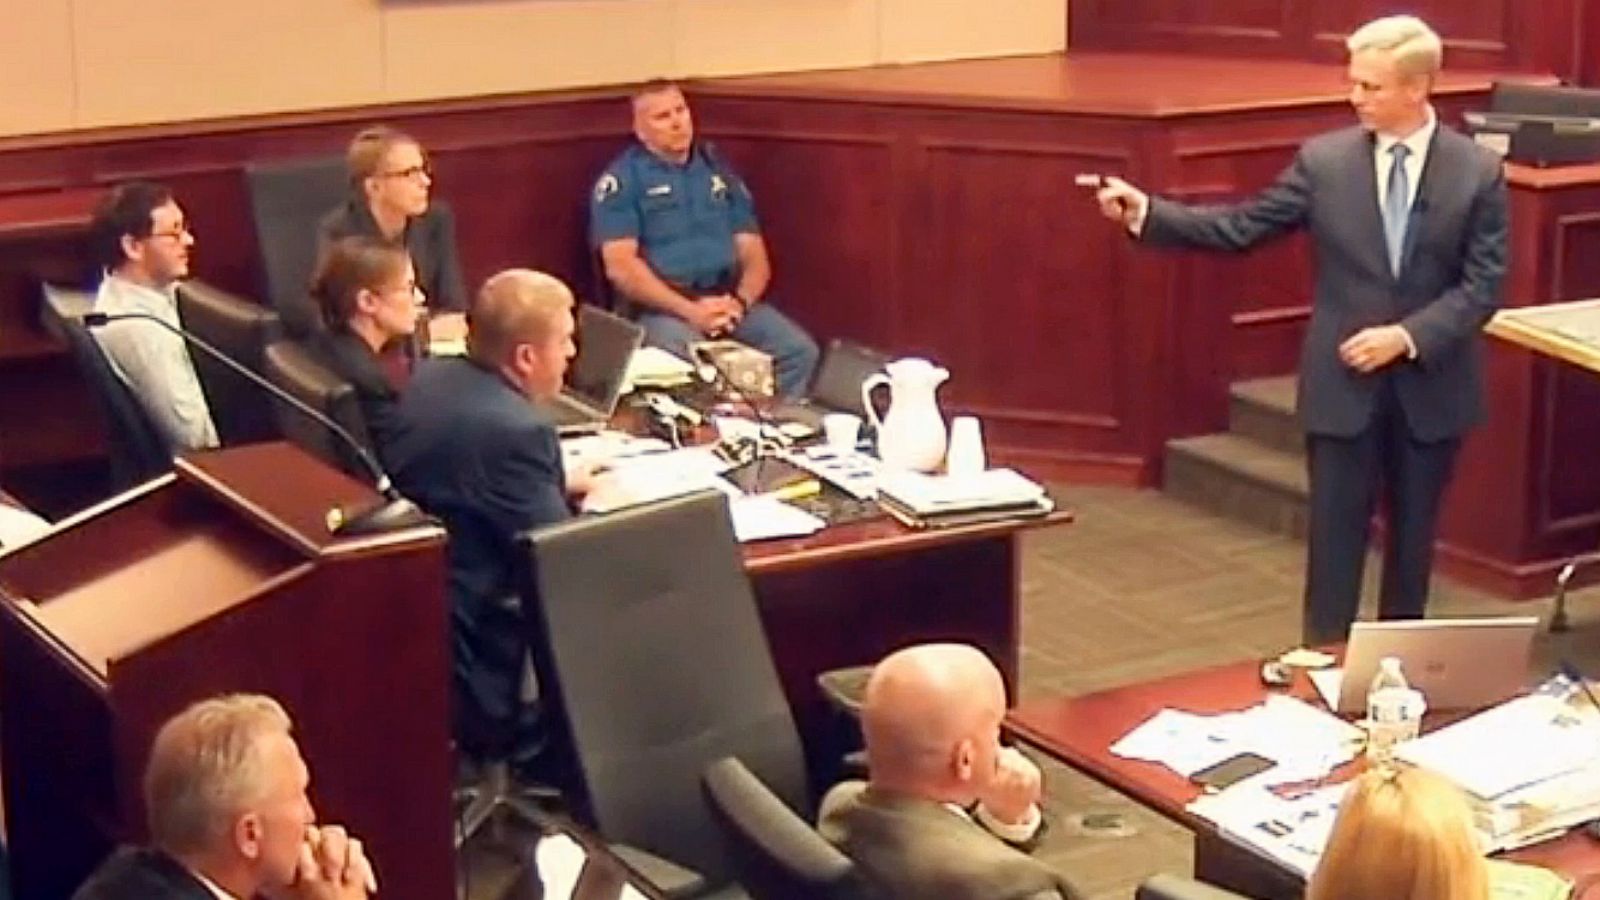 Juror wears Metallica 'electric chair' shirt to Aurora theater murder trial